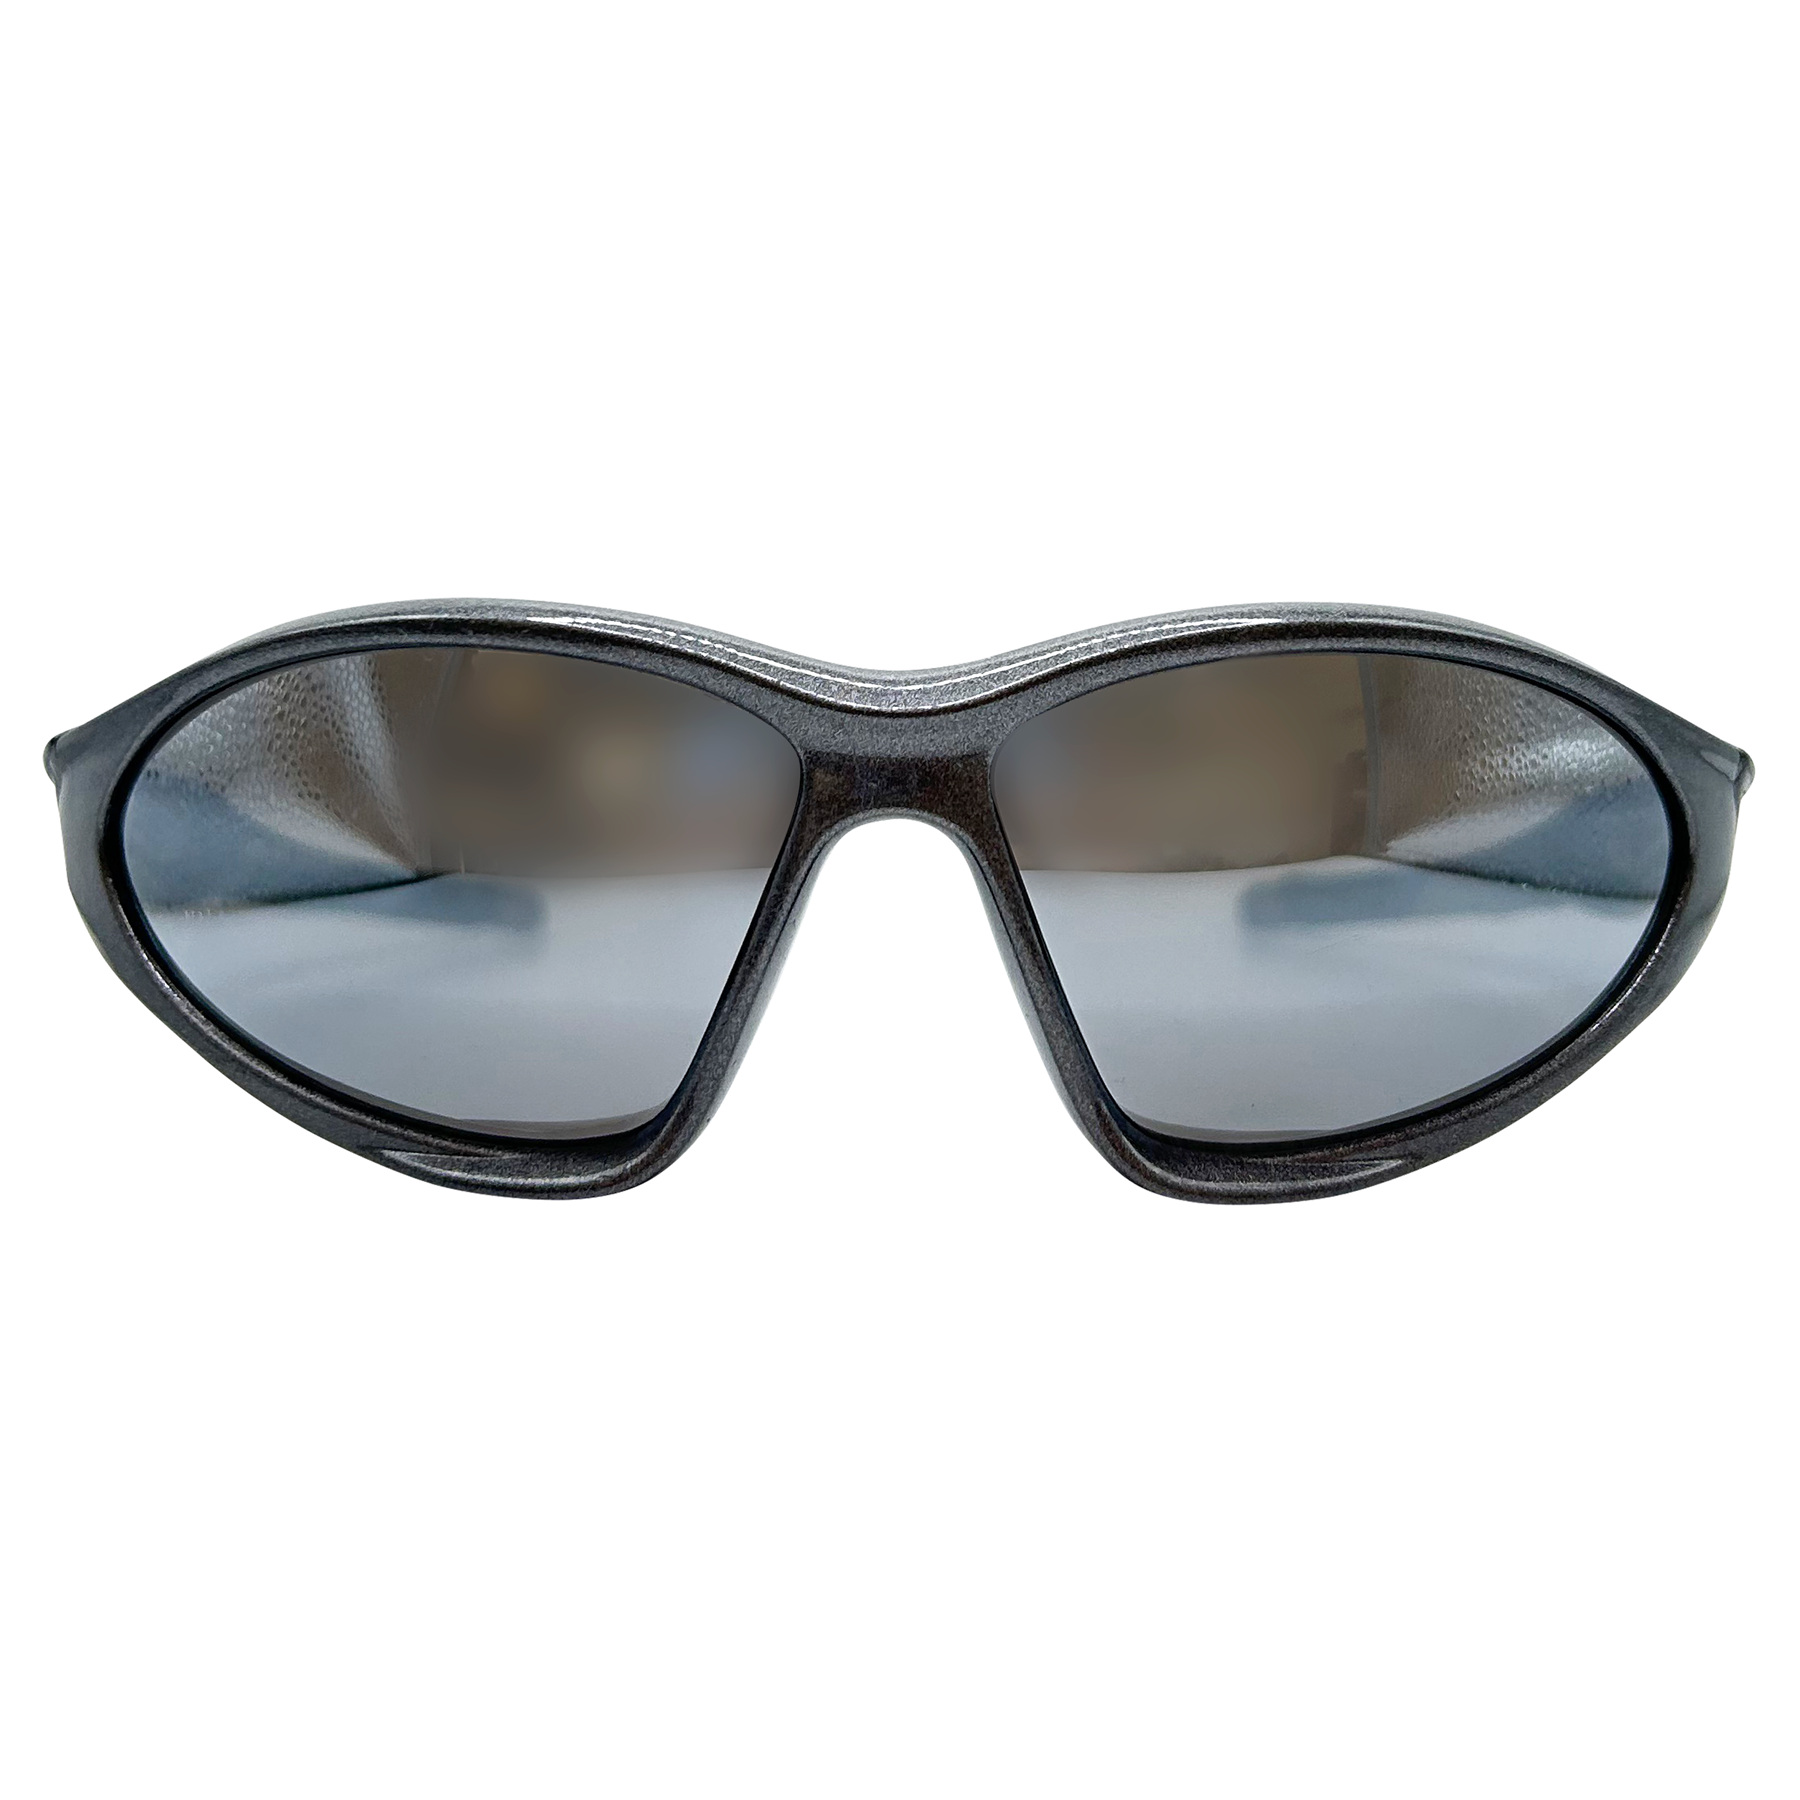 THE 110 Futuristic Sports Sunglasses